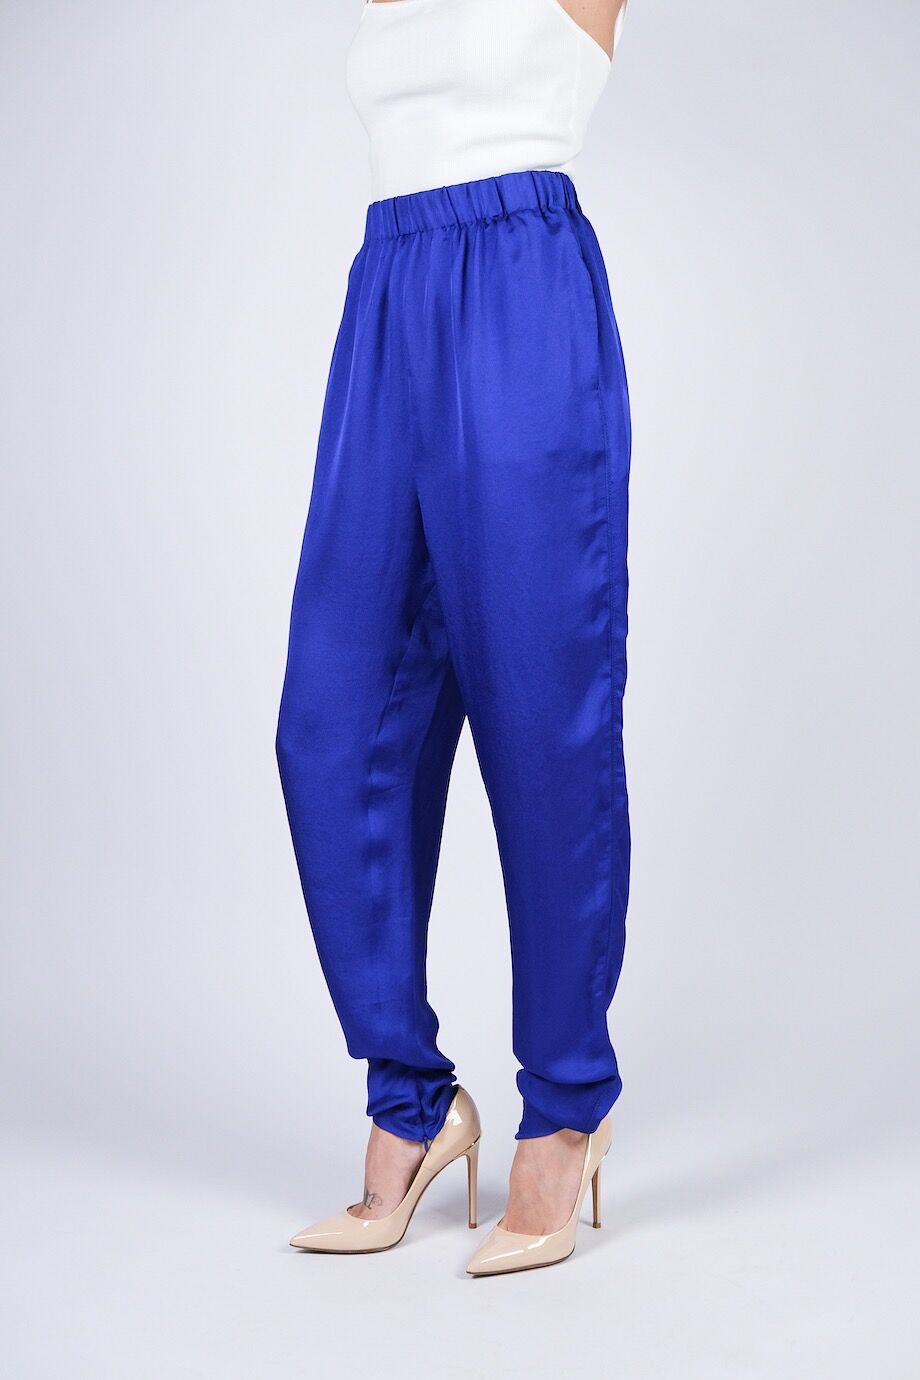 image 3 Атласные брюки синего цвета на резинке